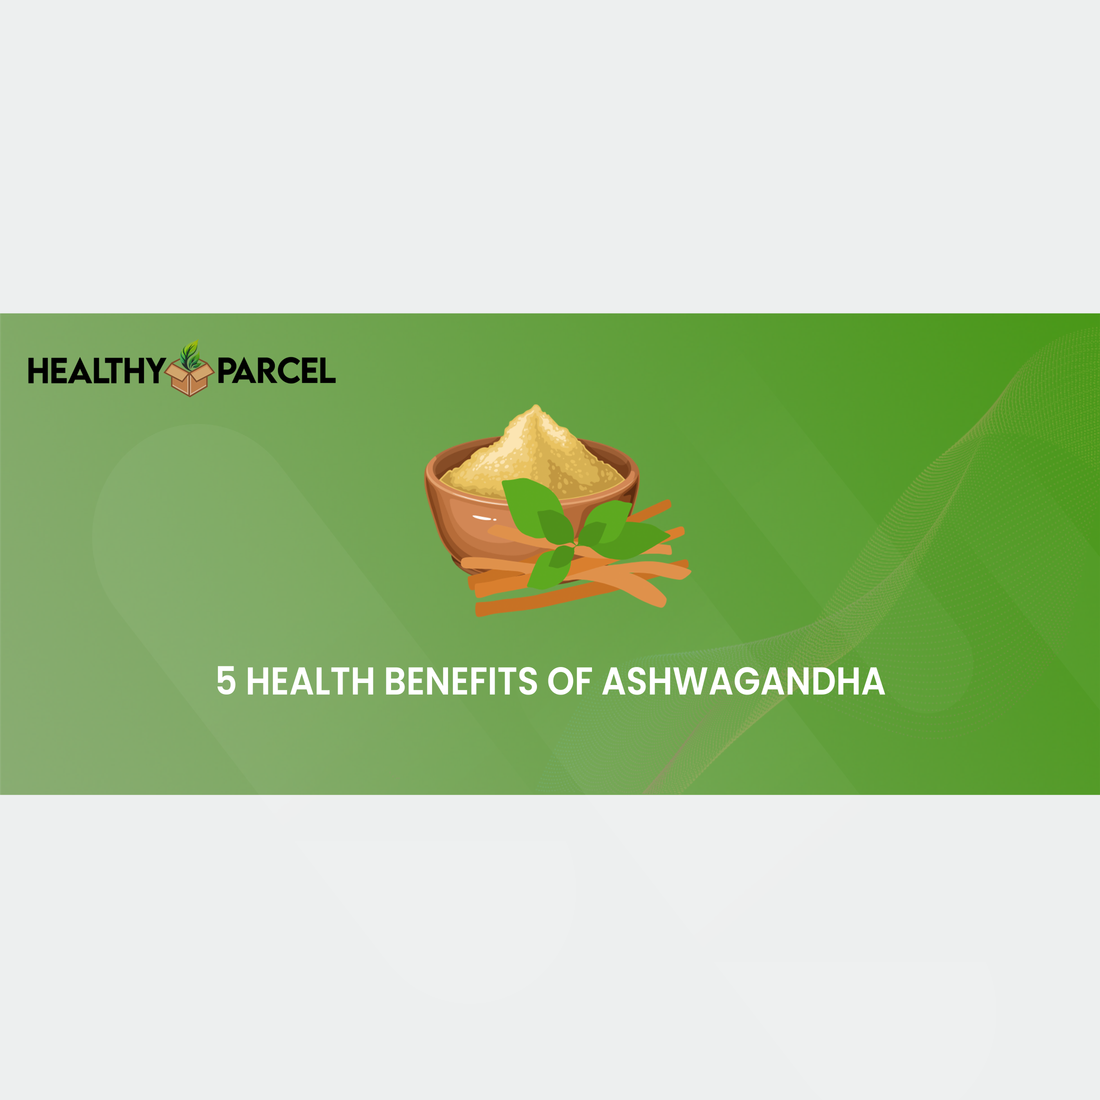 5 Health Benefits of Ashwagandha